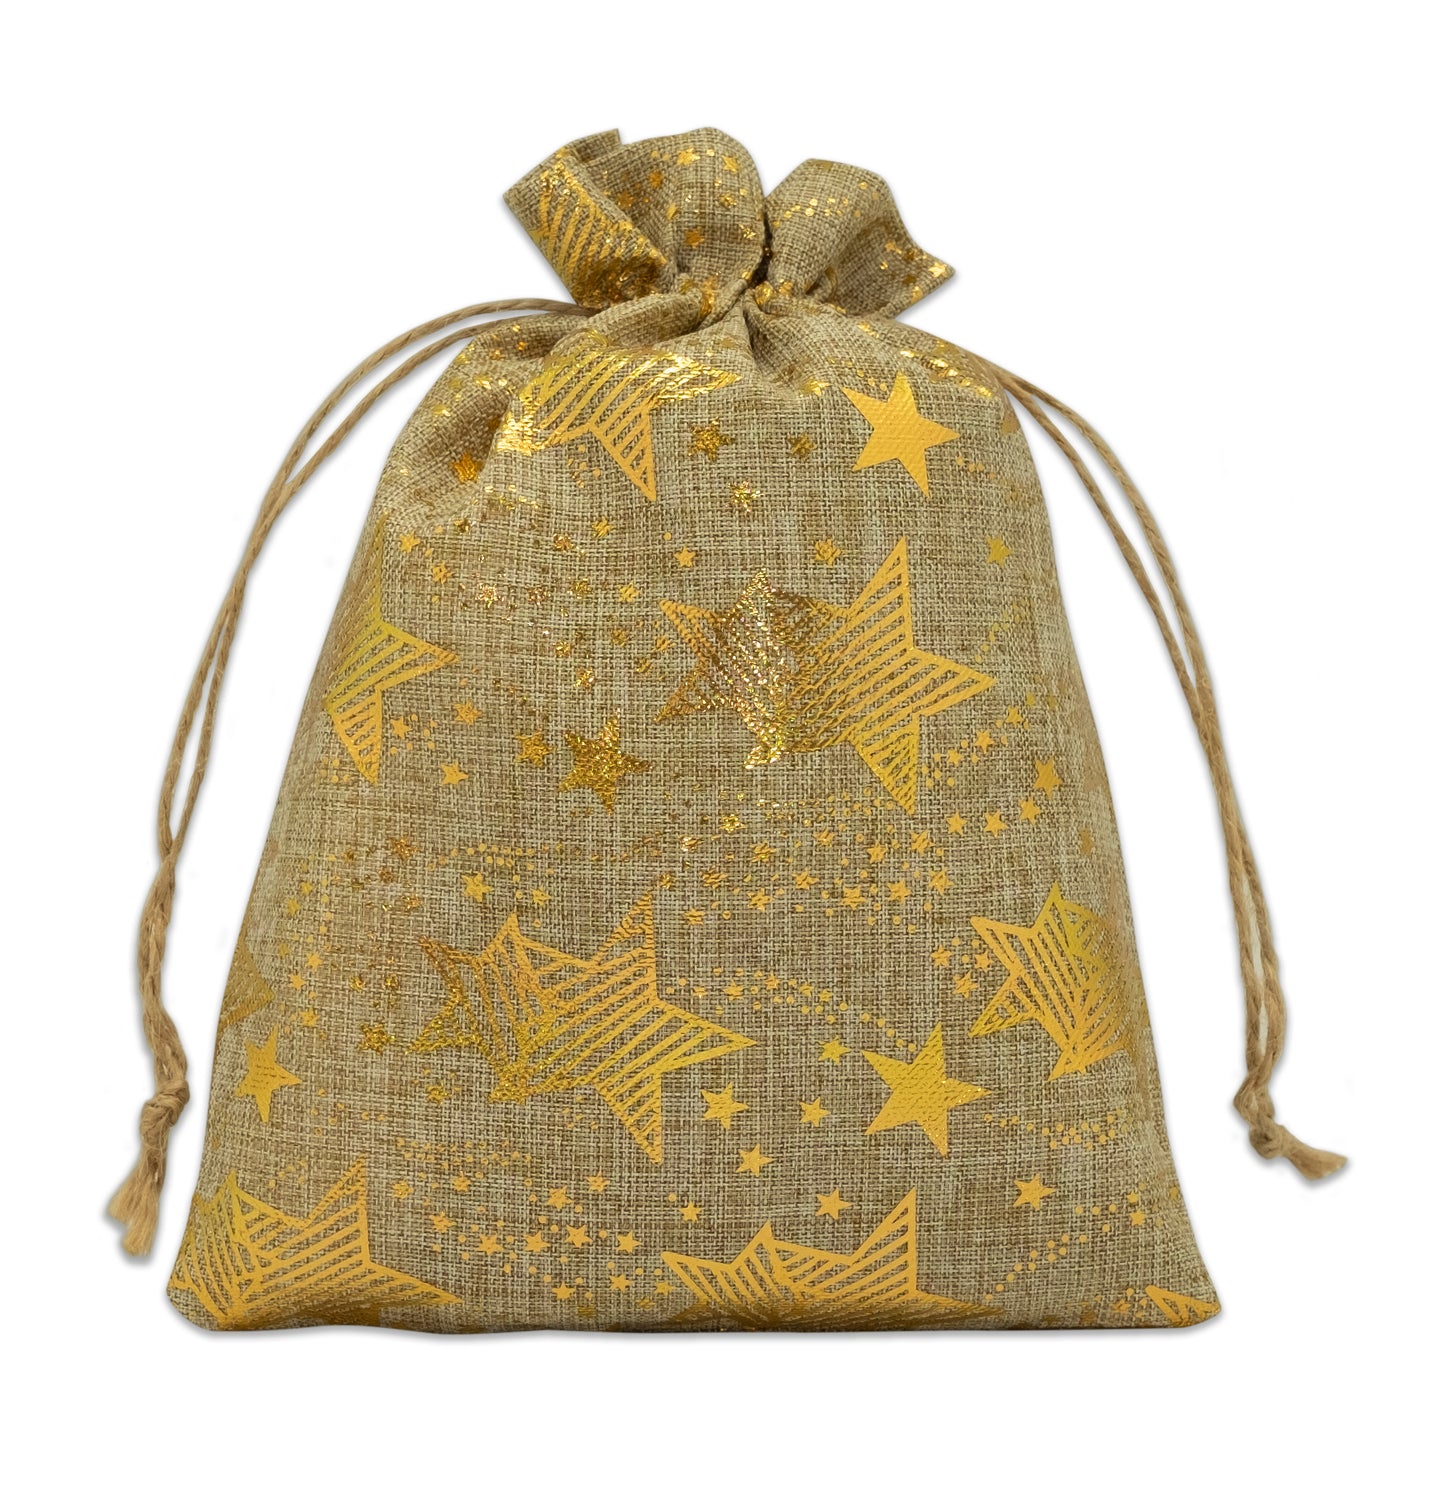 8" x 10" Jute Burlap Gold Star Drawstring Gift Bags